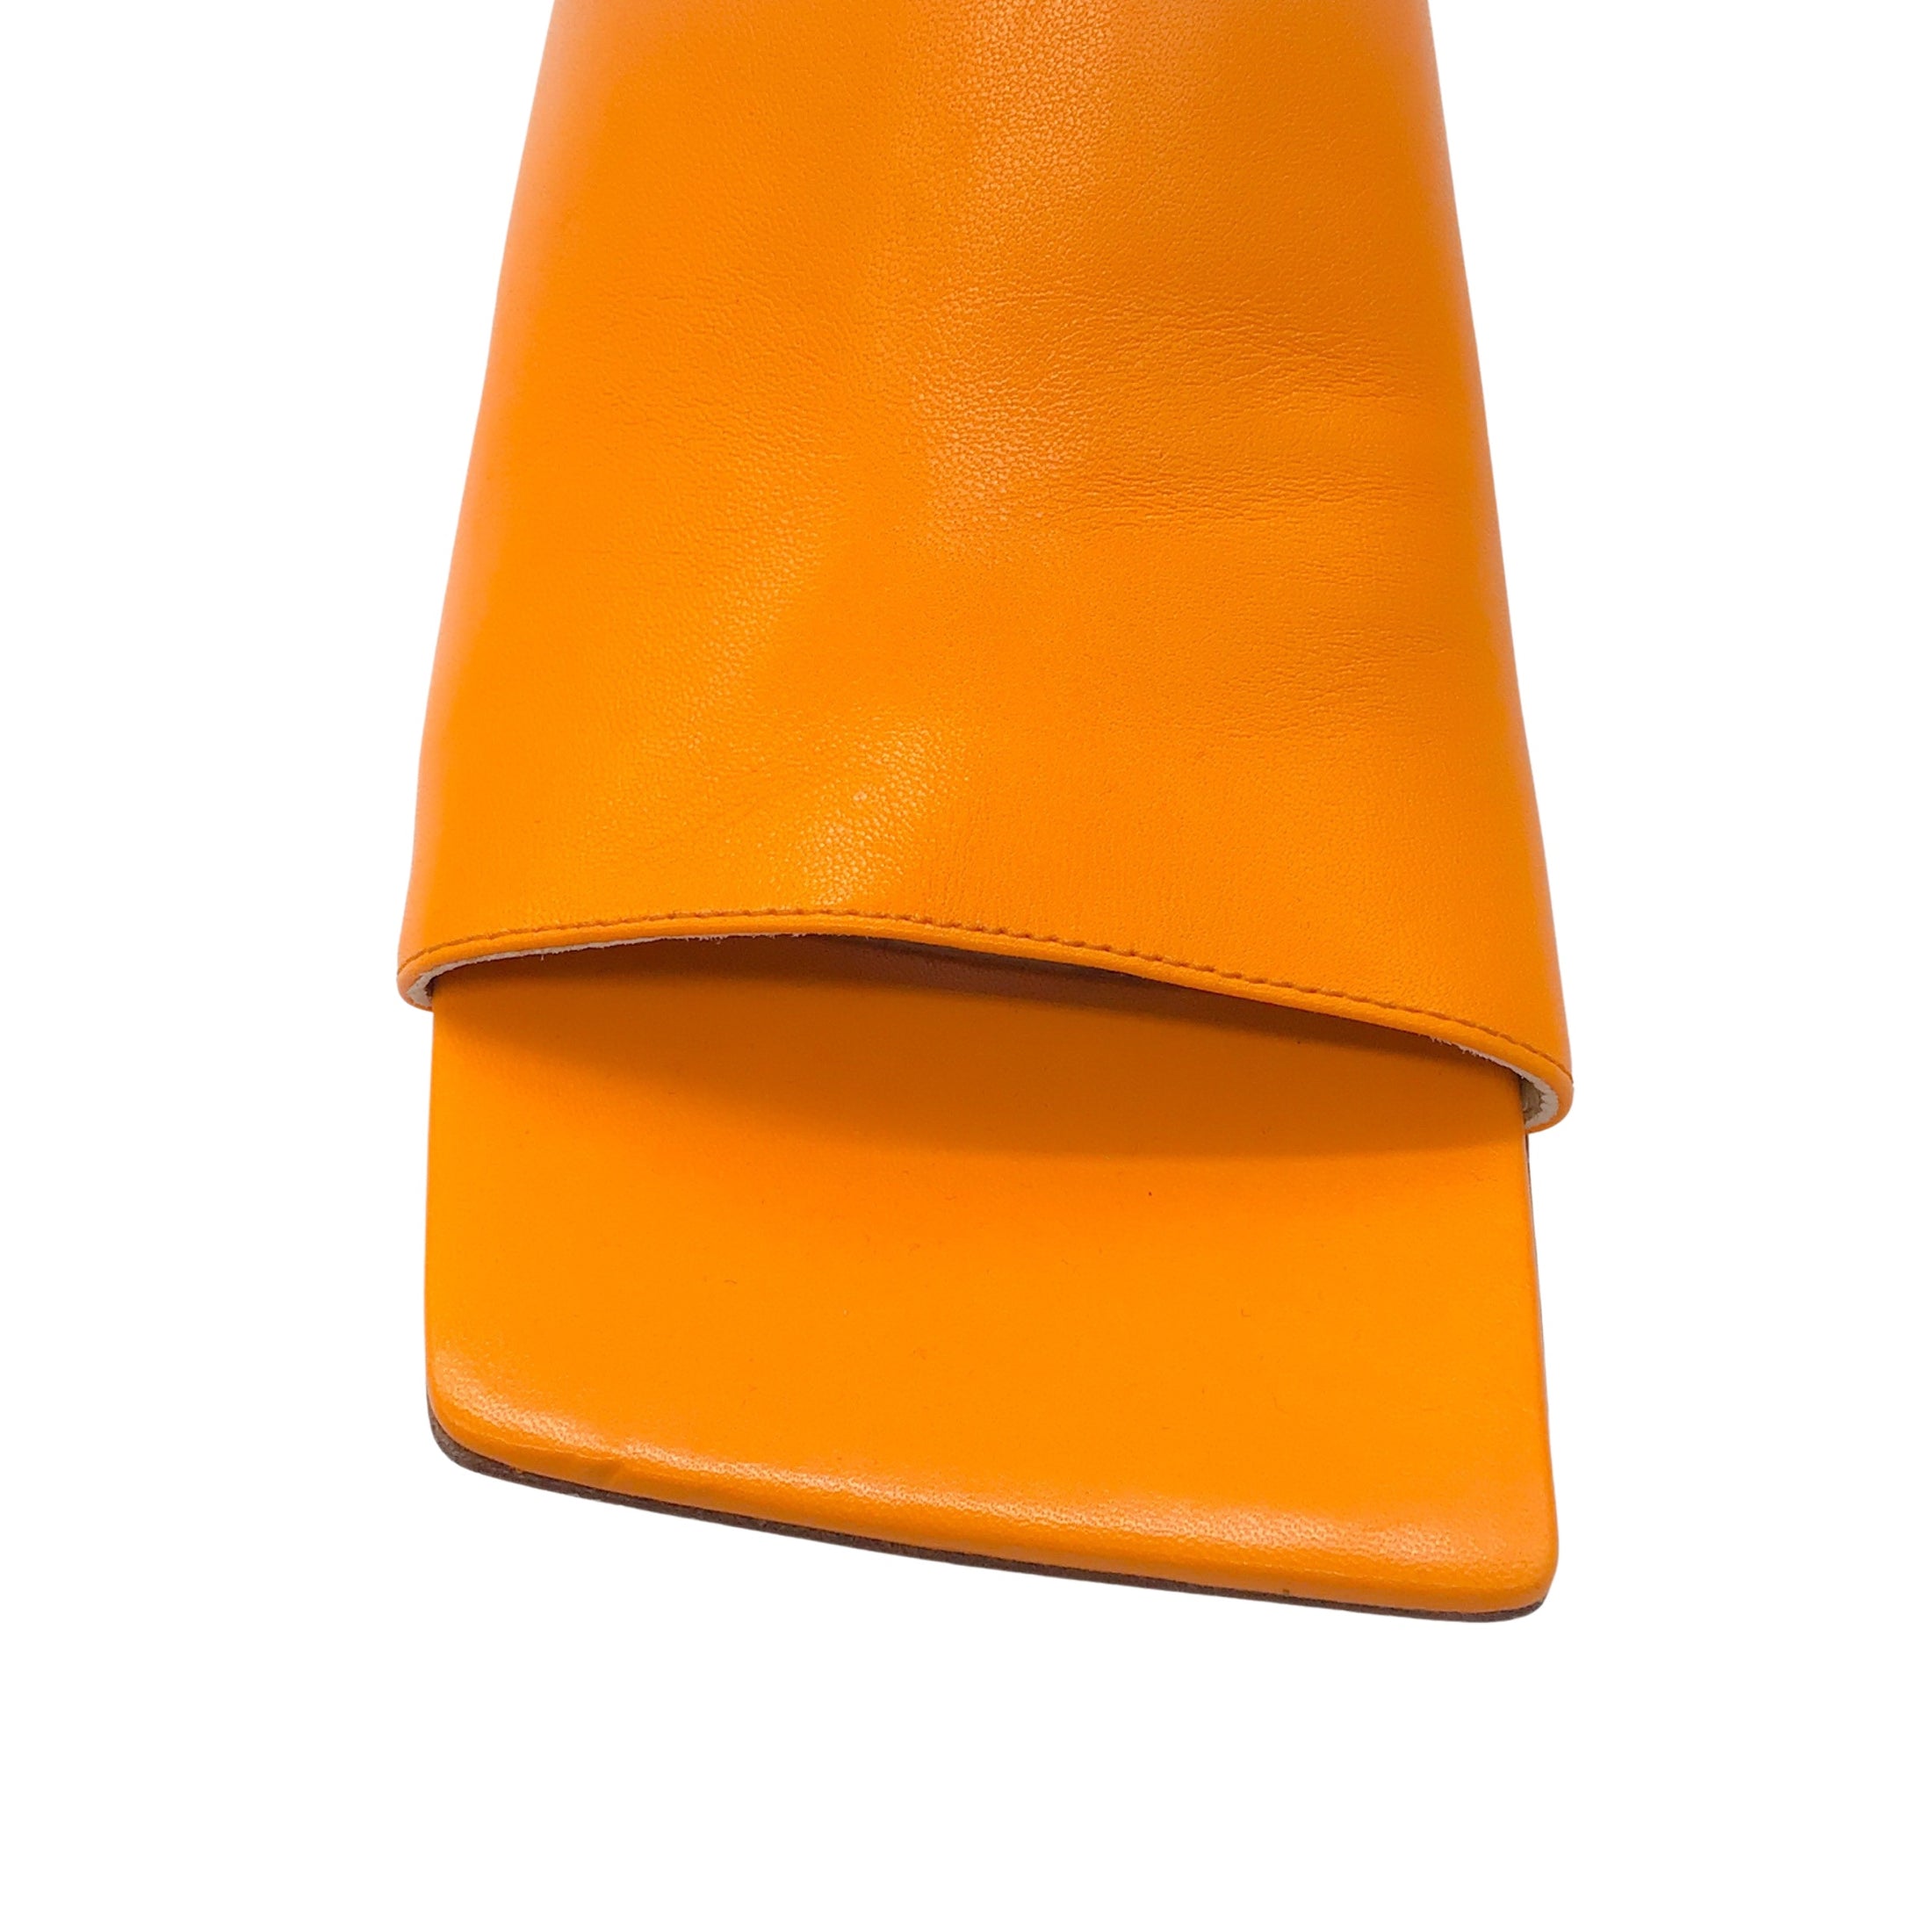 Bottega Veneta Orange Square Toe Leather Mule Sandals